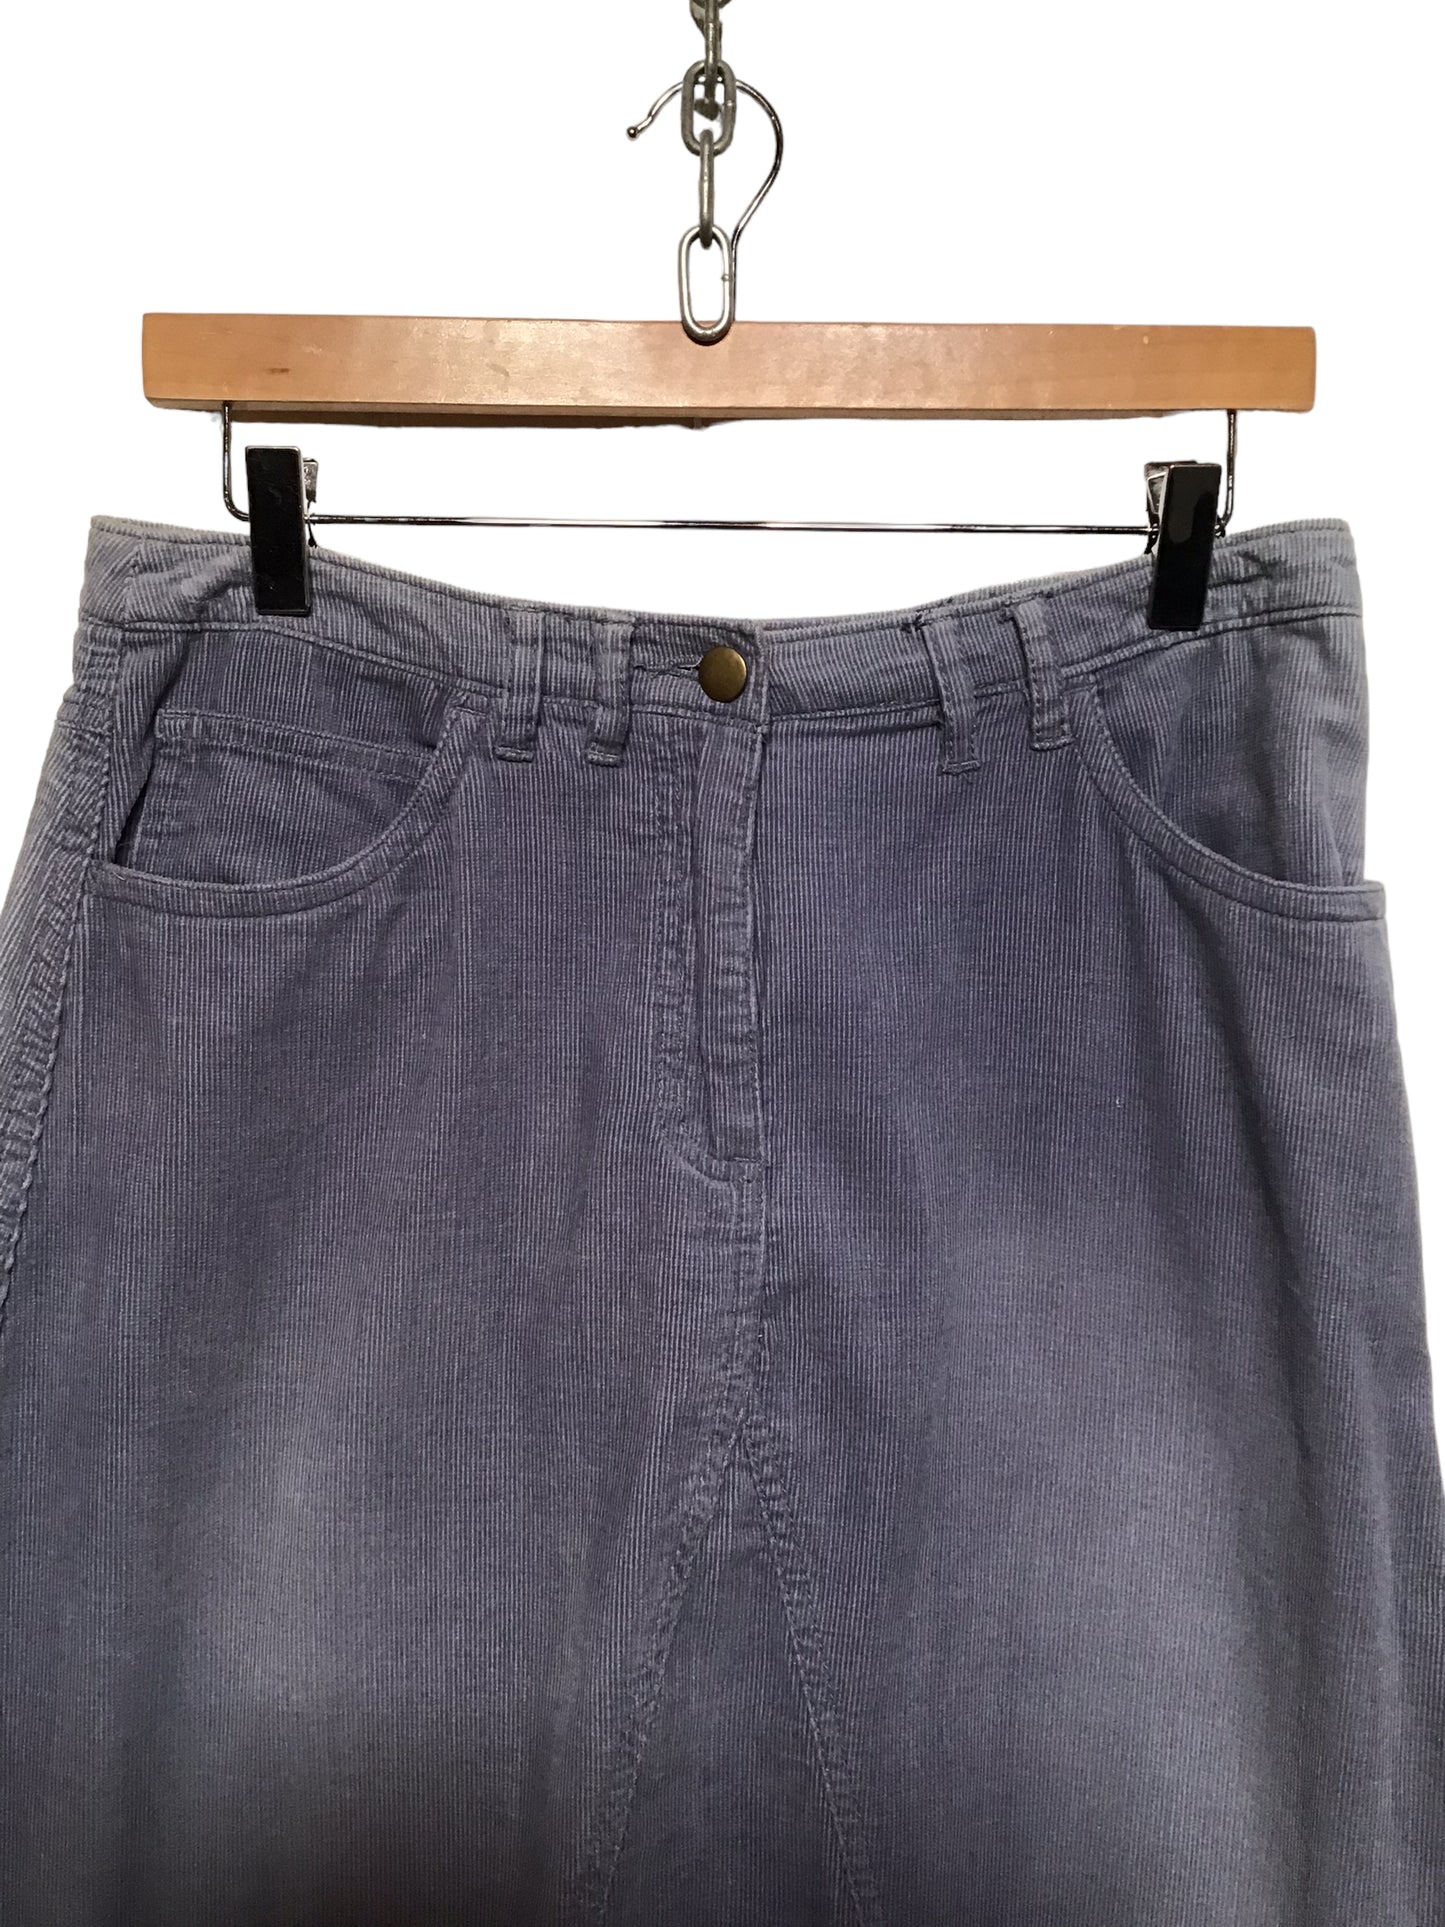 Corduroy Skirt (Size L)